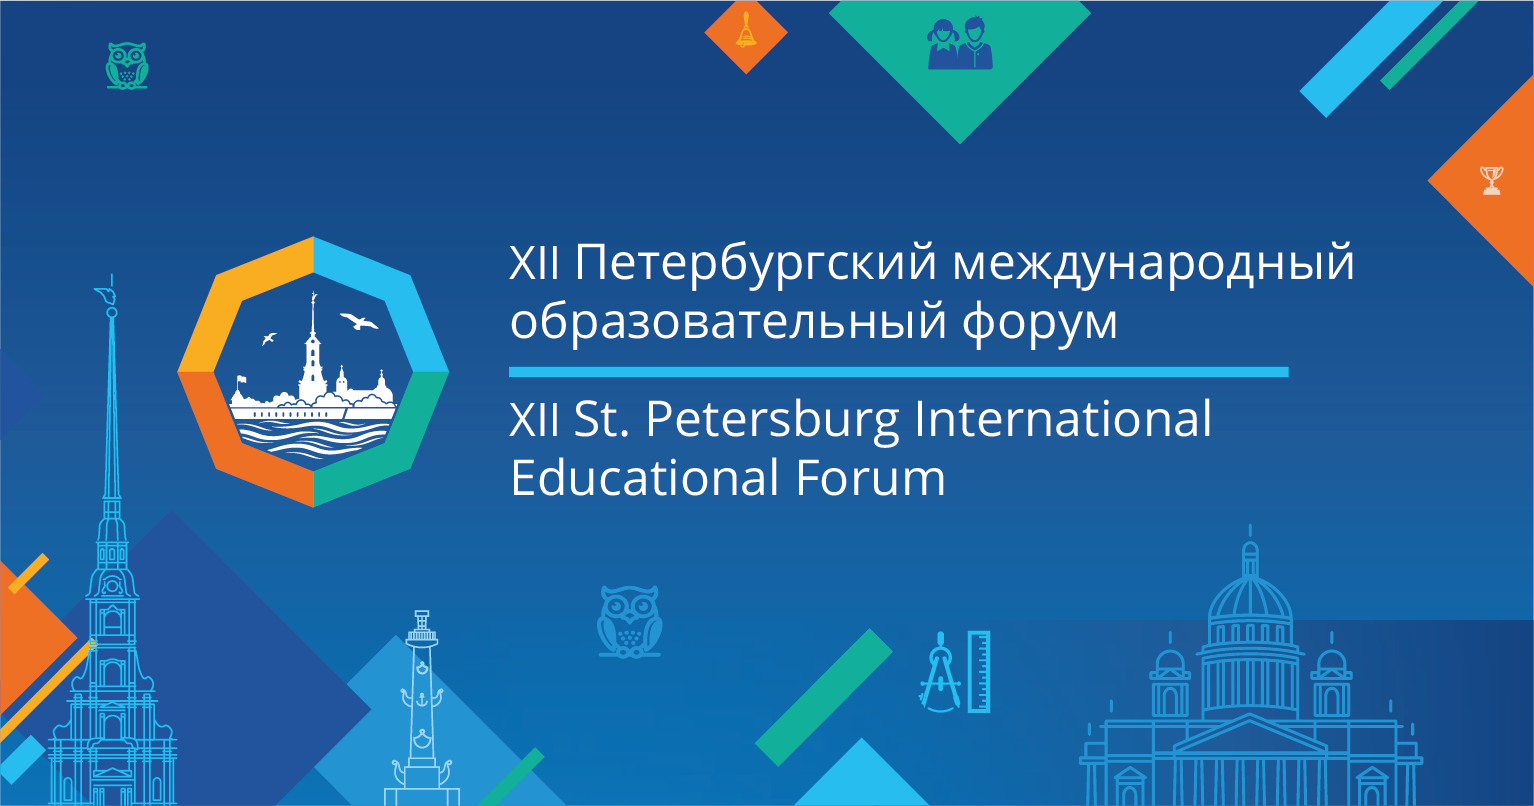 Natalia Putilovskaya: 100,000 Participants Registered for the Events of the XII St. Petersburg International Educational Forum